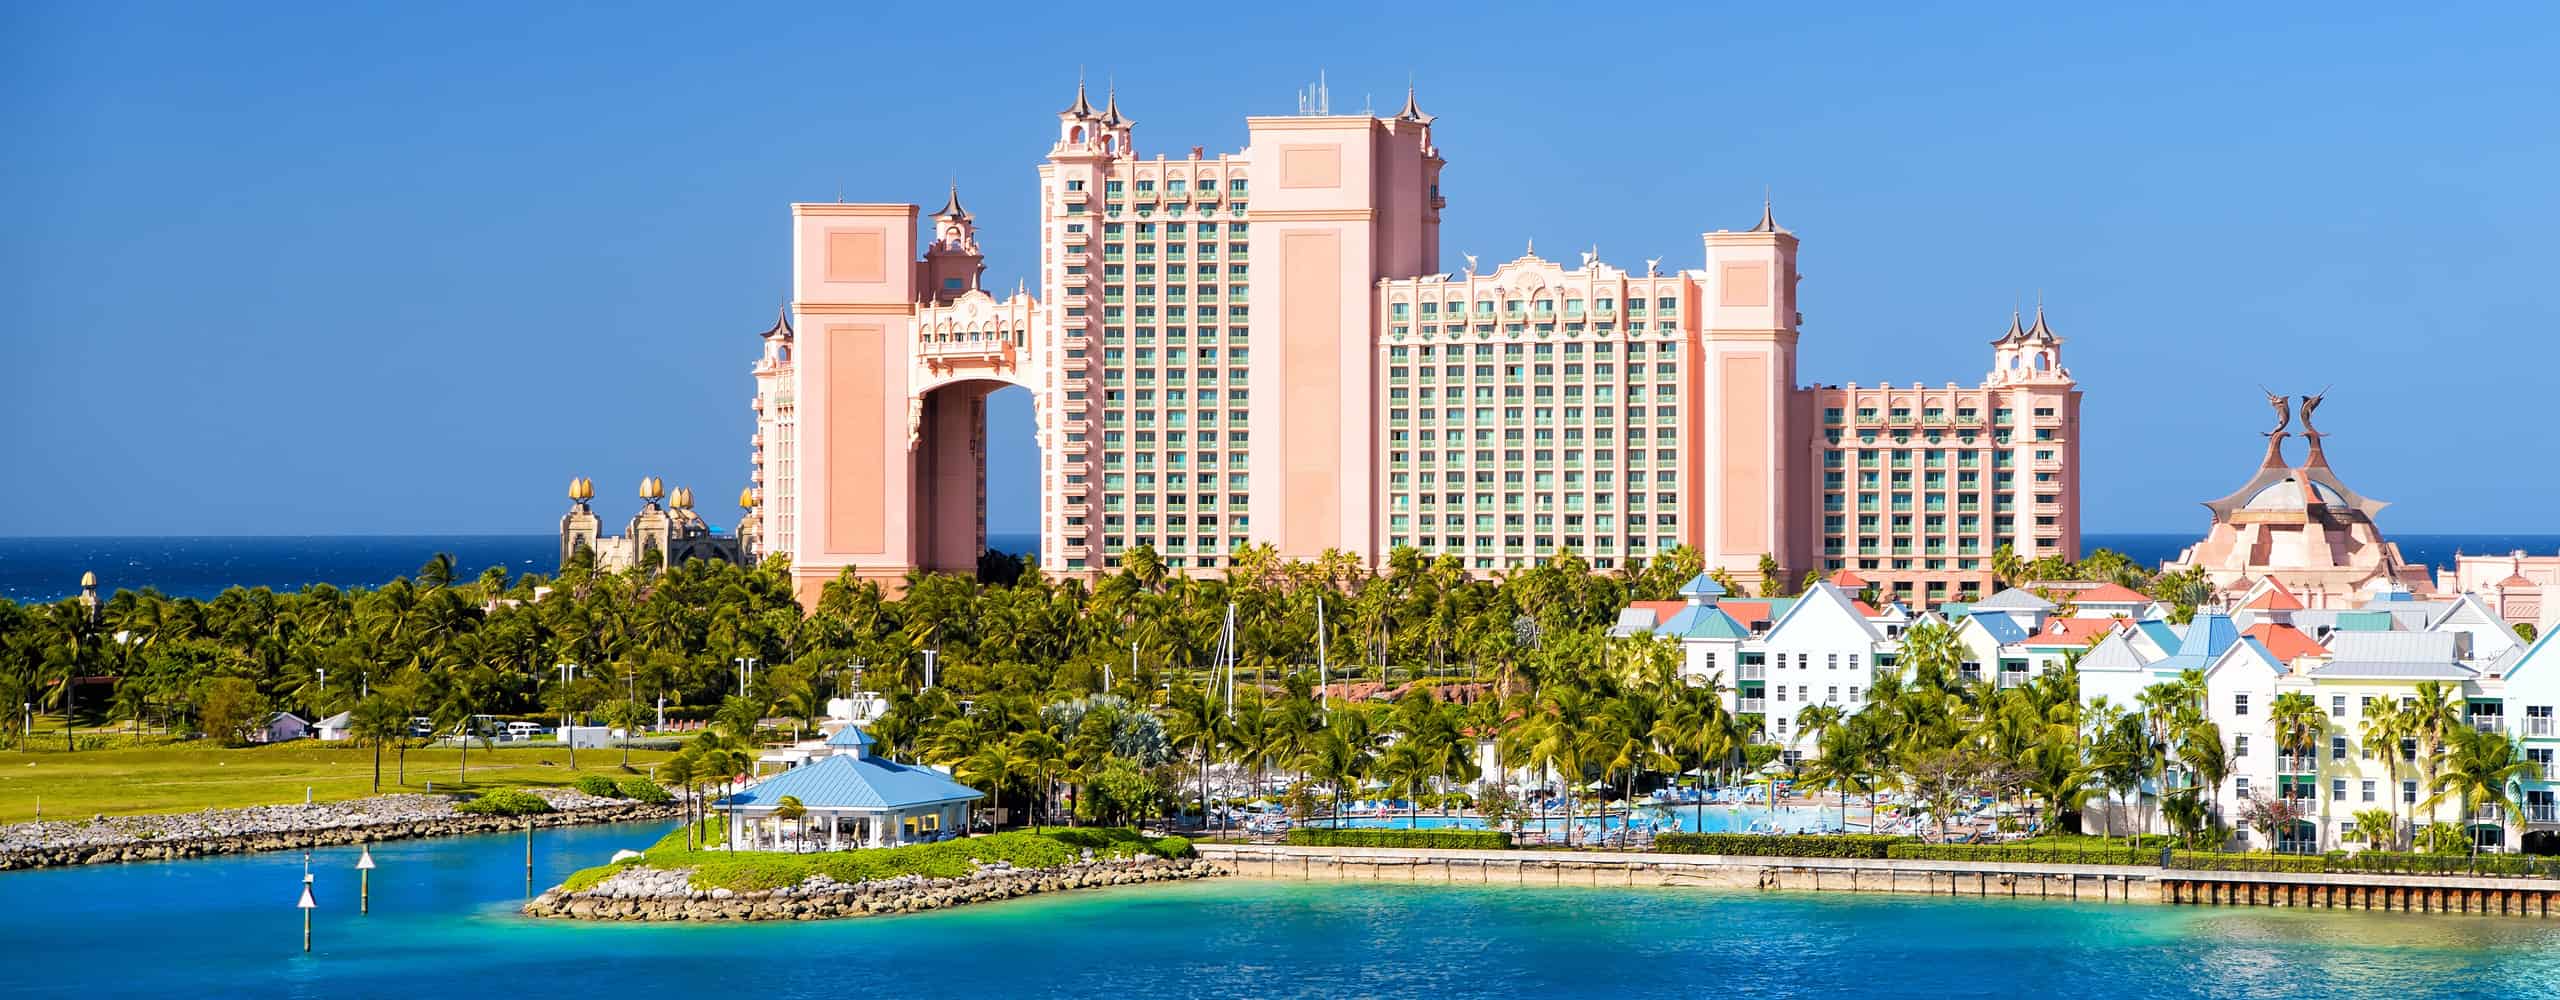 Tour the Atlantis Paradise Island Resort